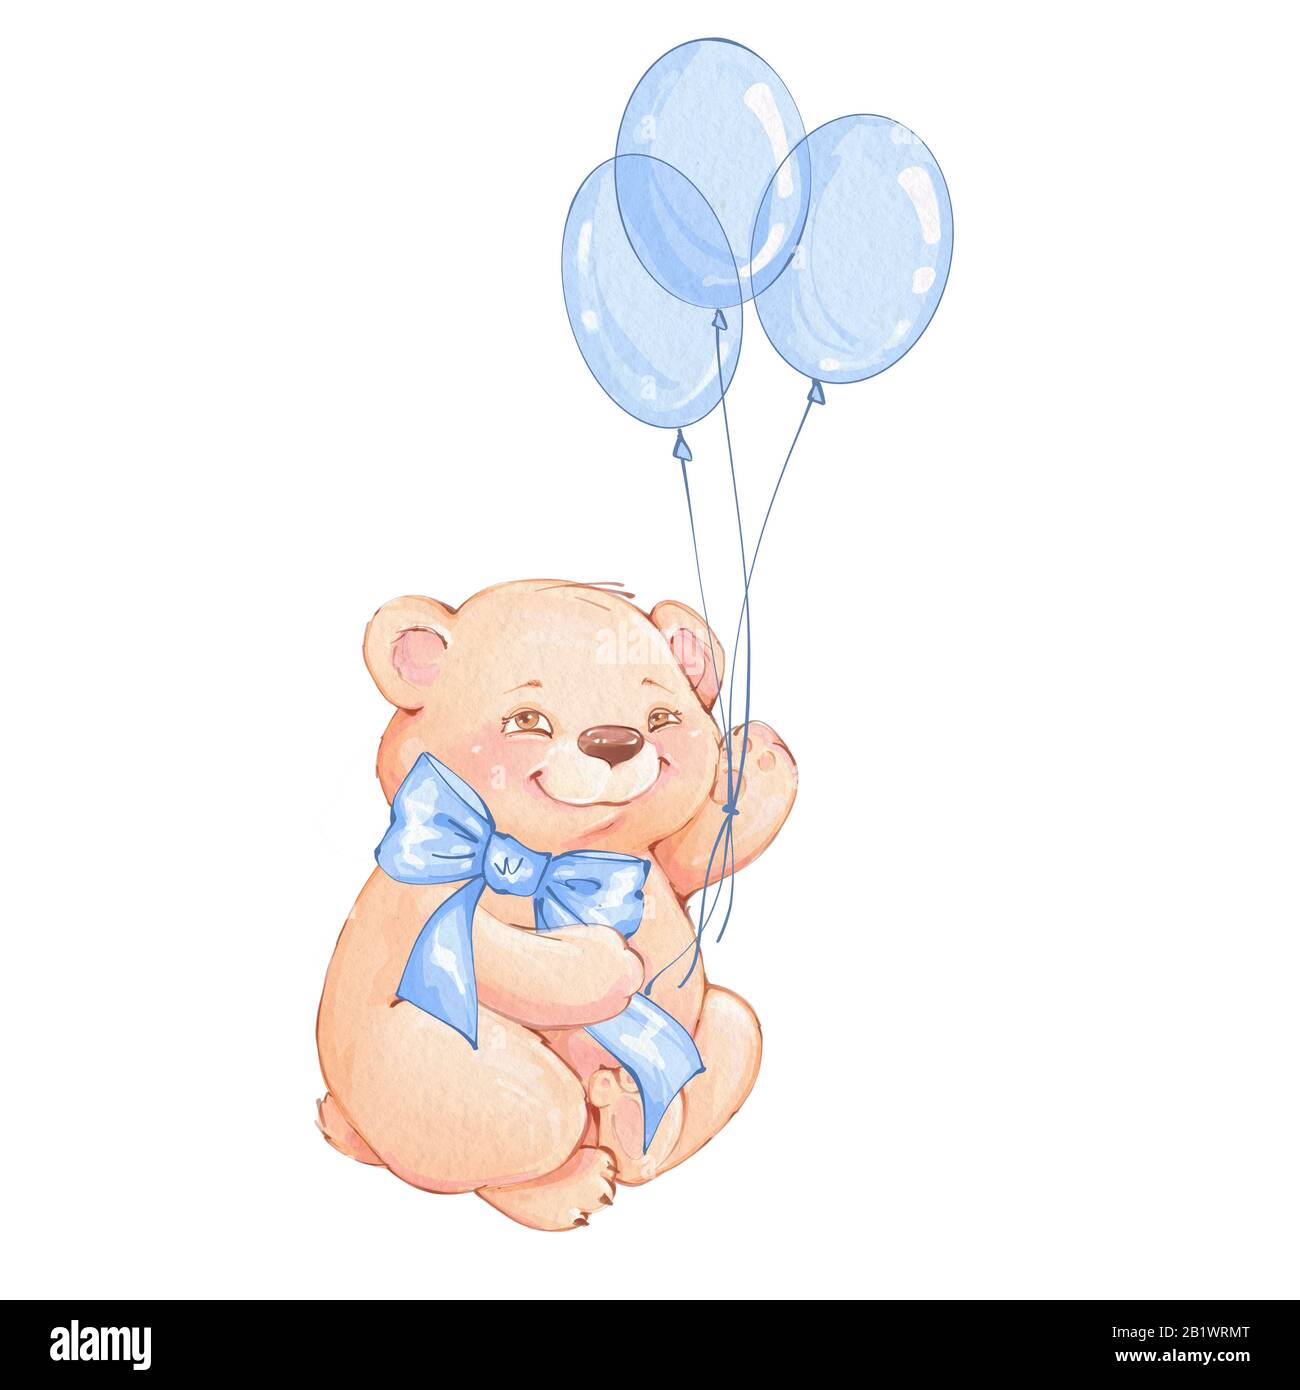 Cute Teddy Bear with blue balloons Stock Photo